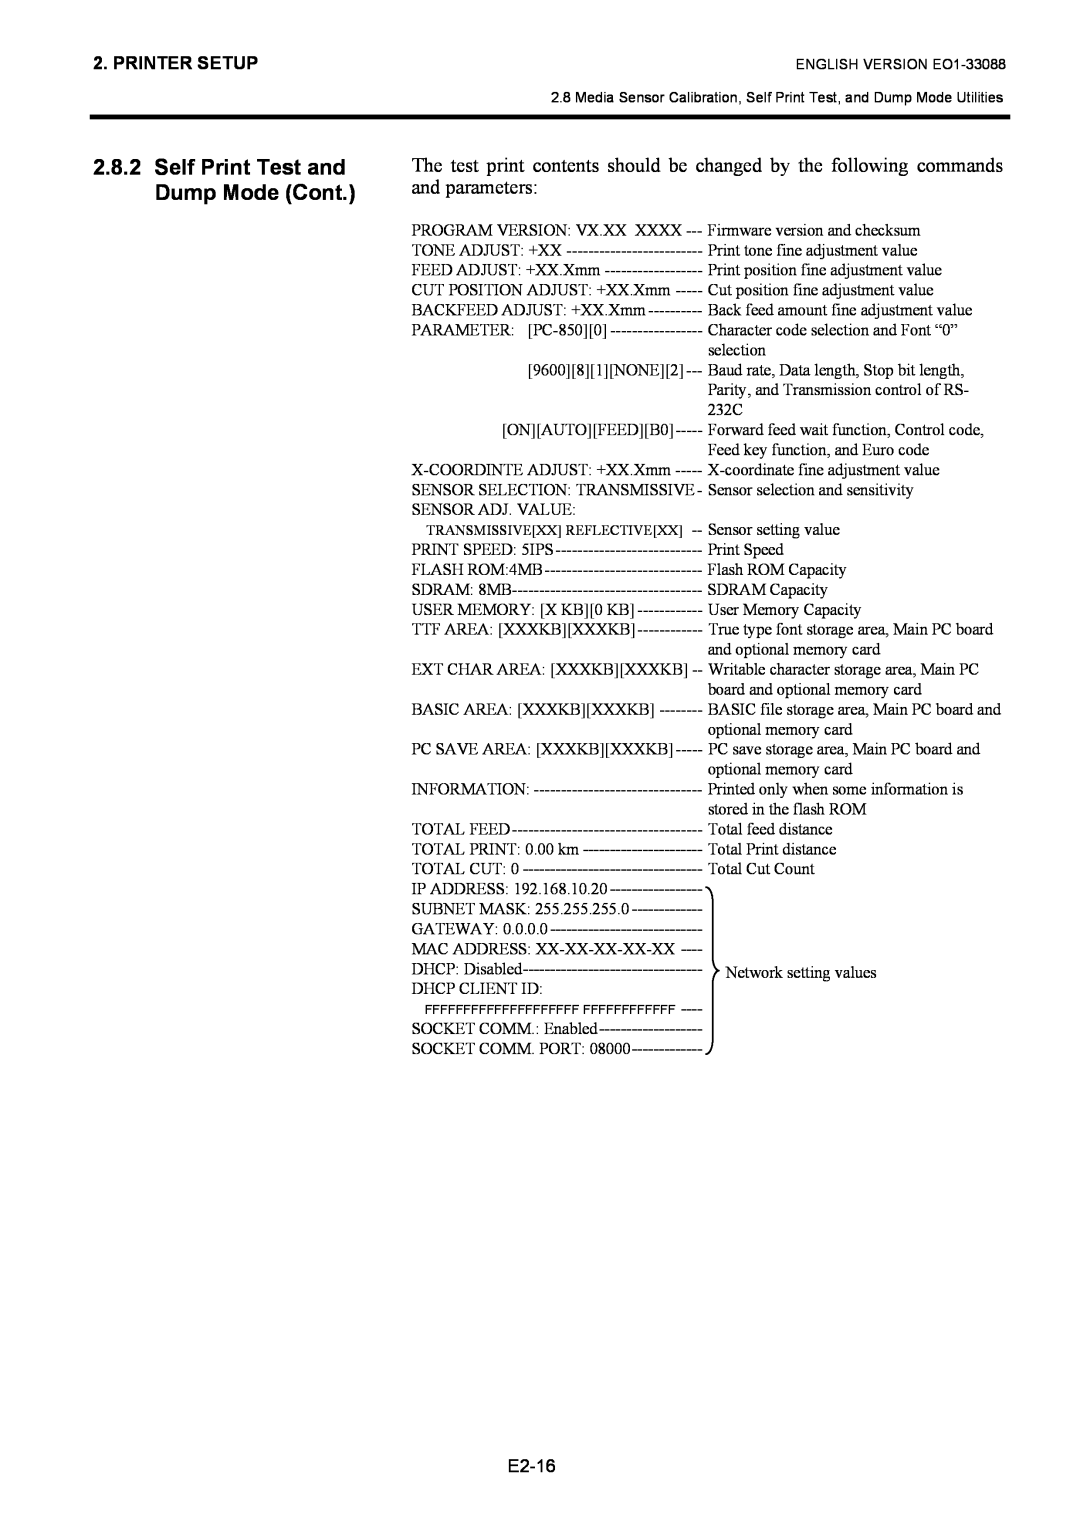 Toshiba B-EV4D SERIES, EO1-33088 owner manual Self Print Test and Dump Mode Cont, Printer Setup, E2-16 